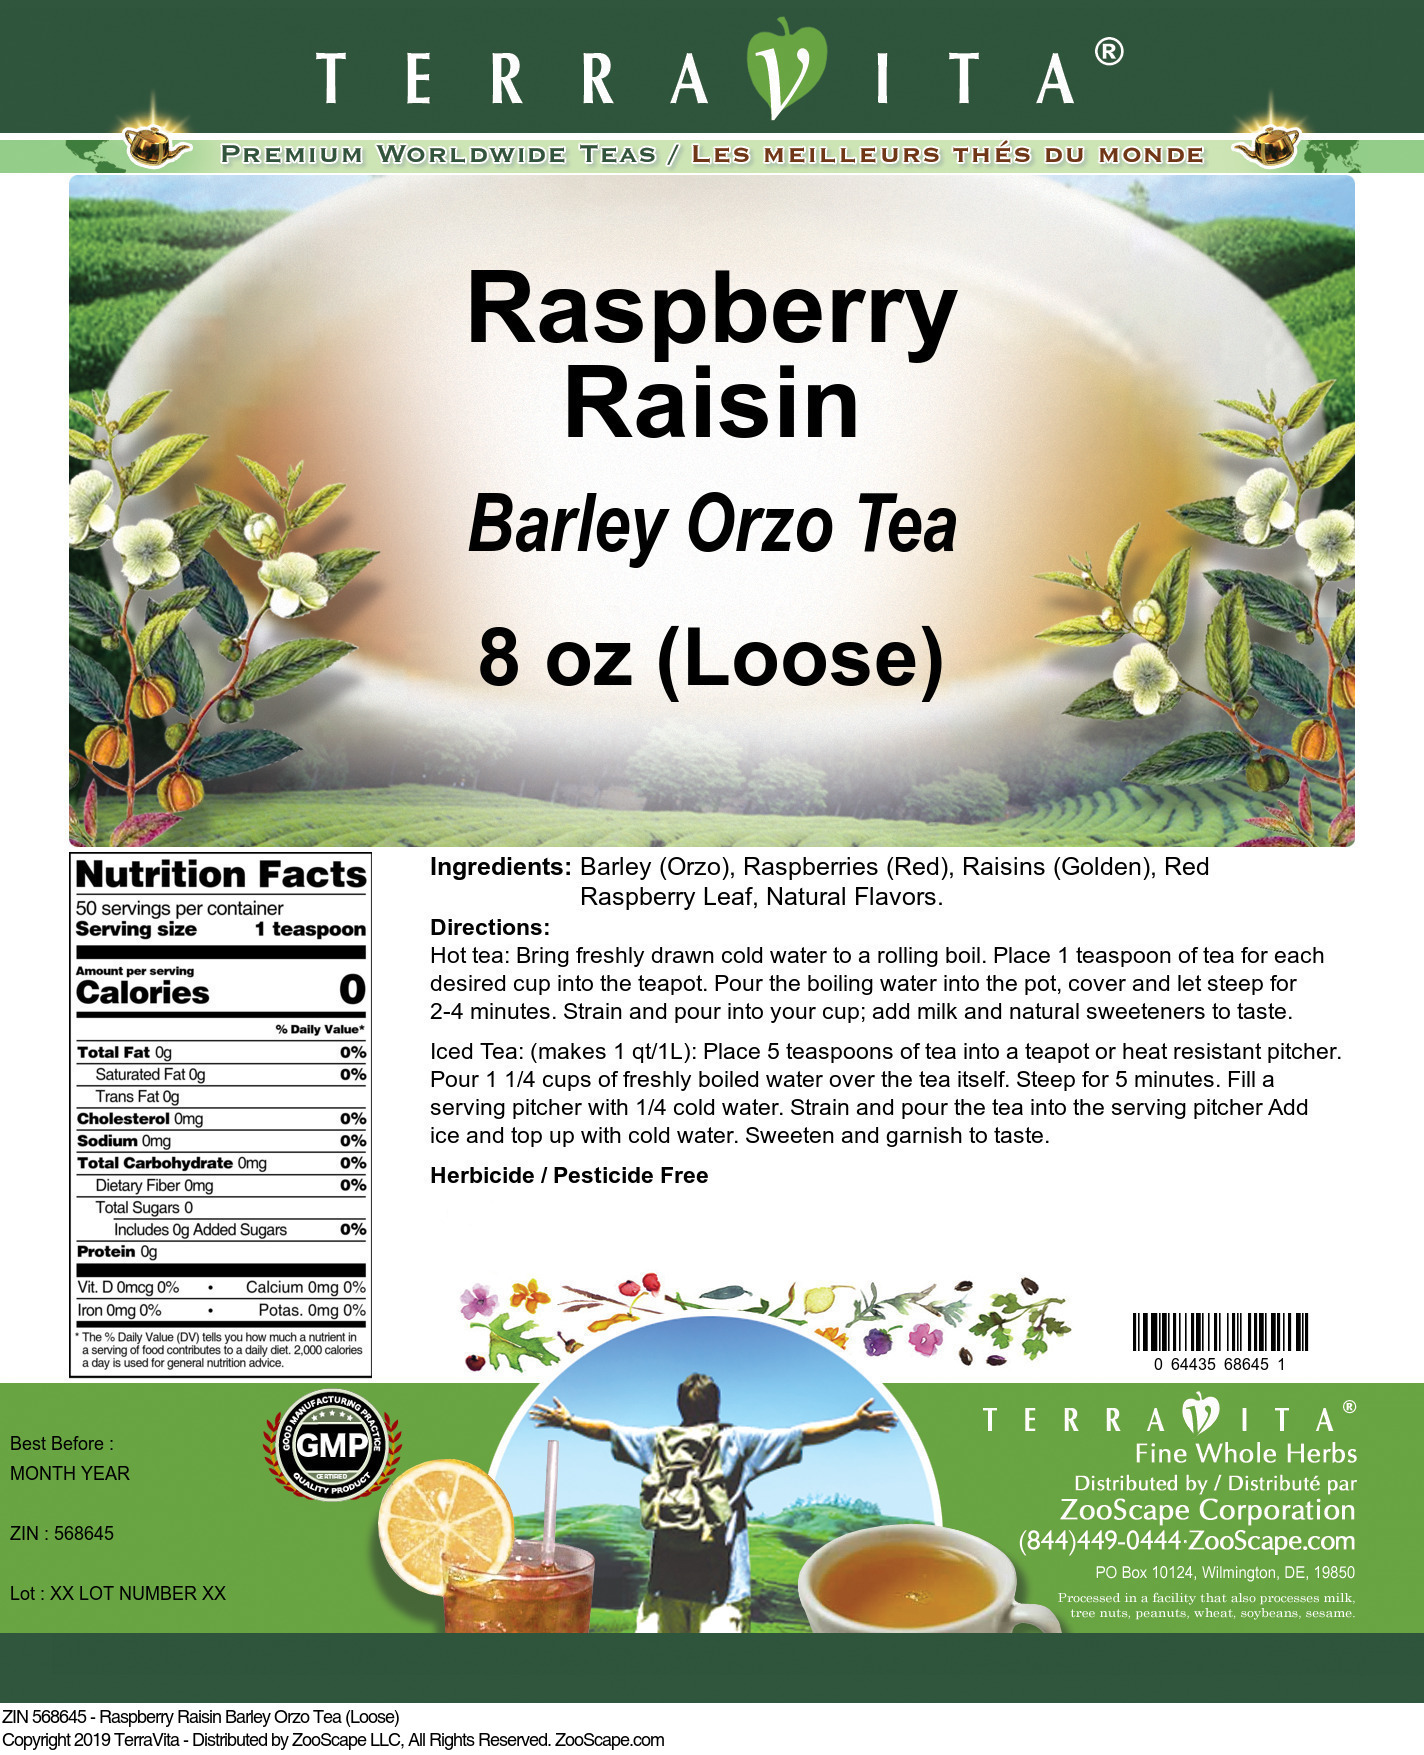 Raspberry Raisin Barley Orzo Tea (Loose) - Label